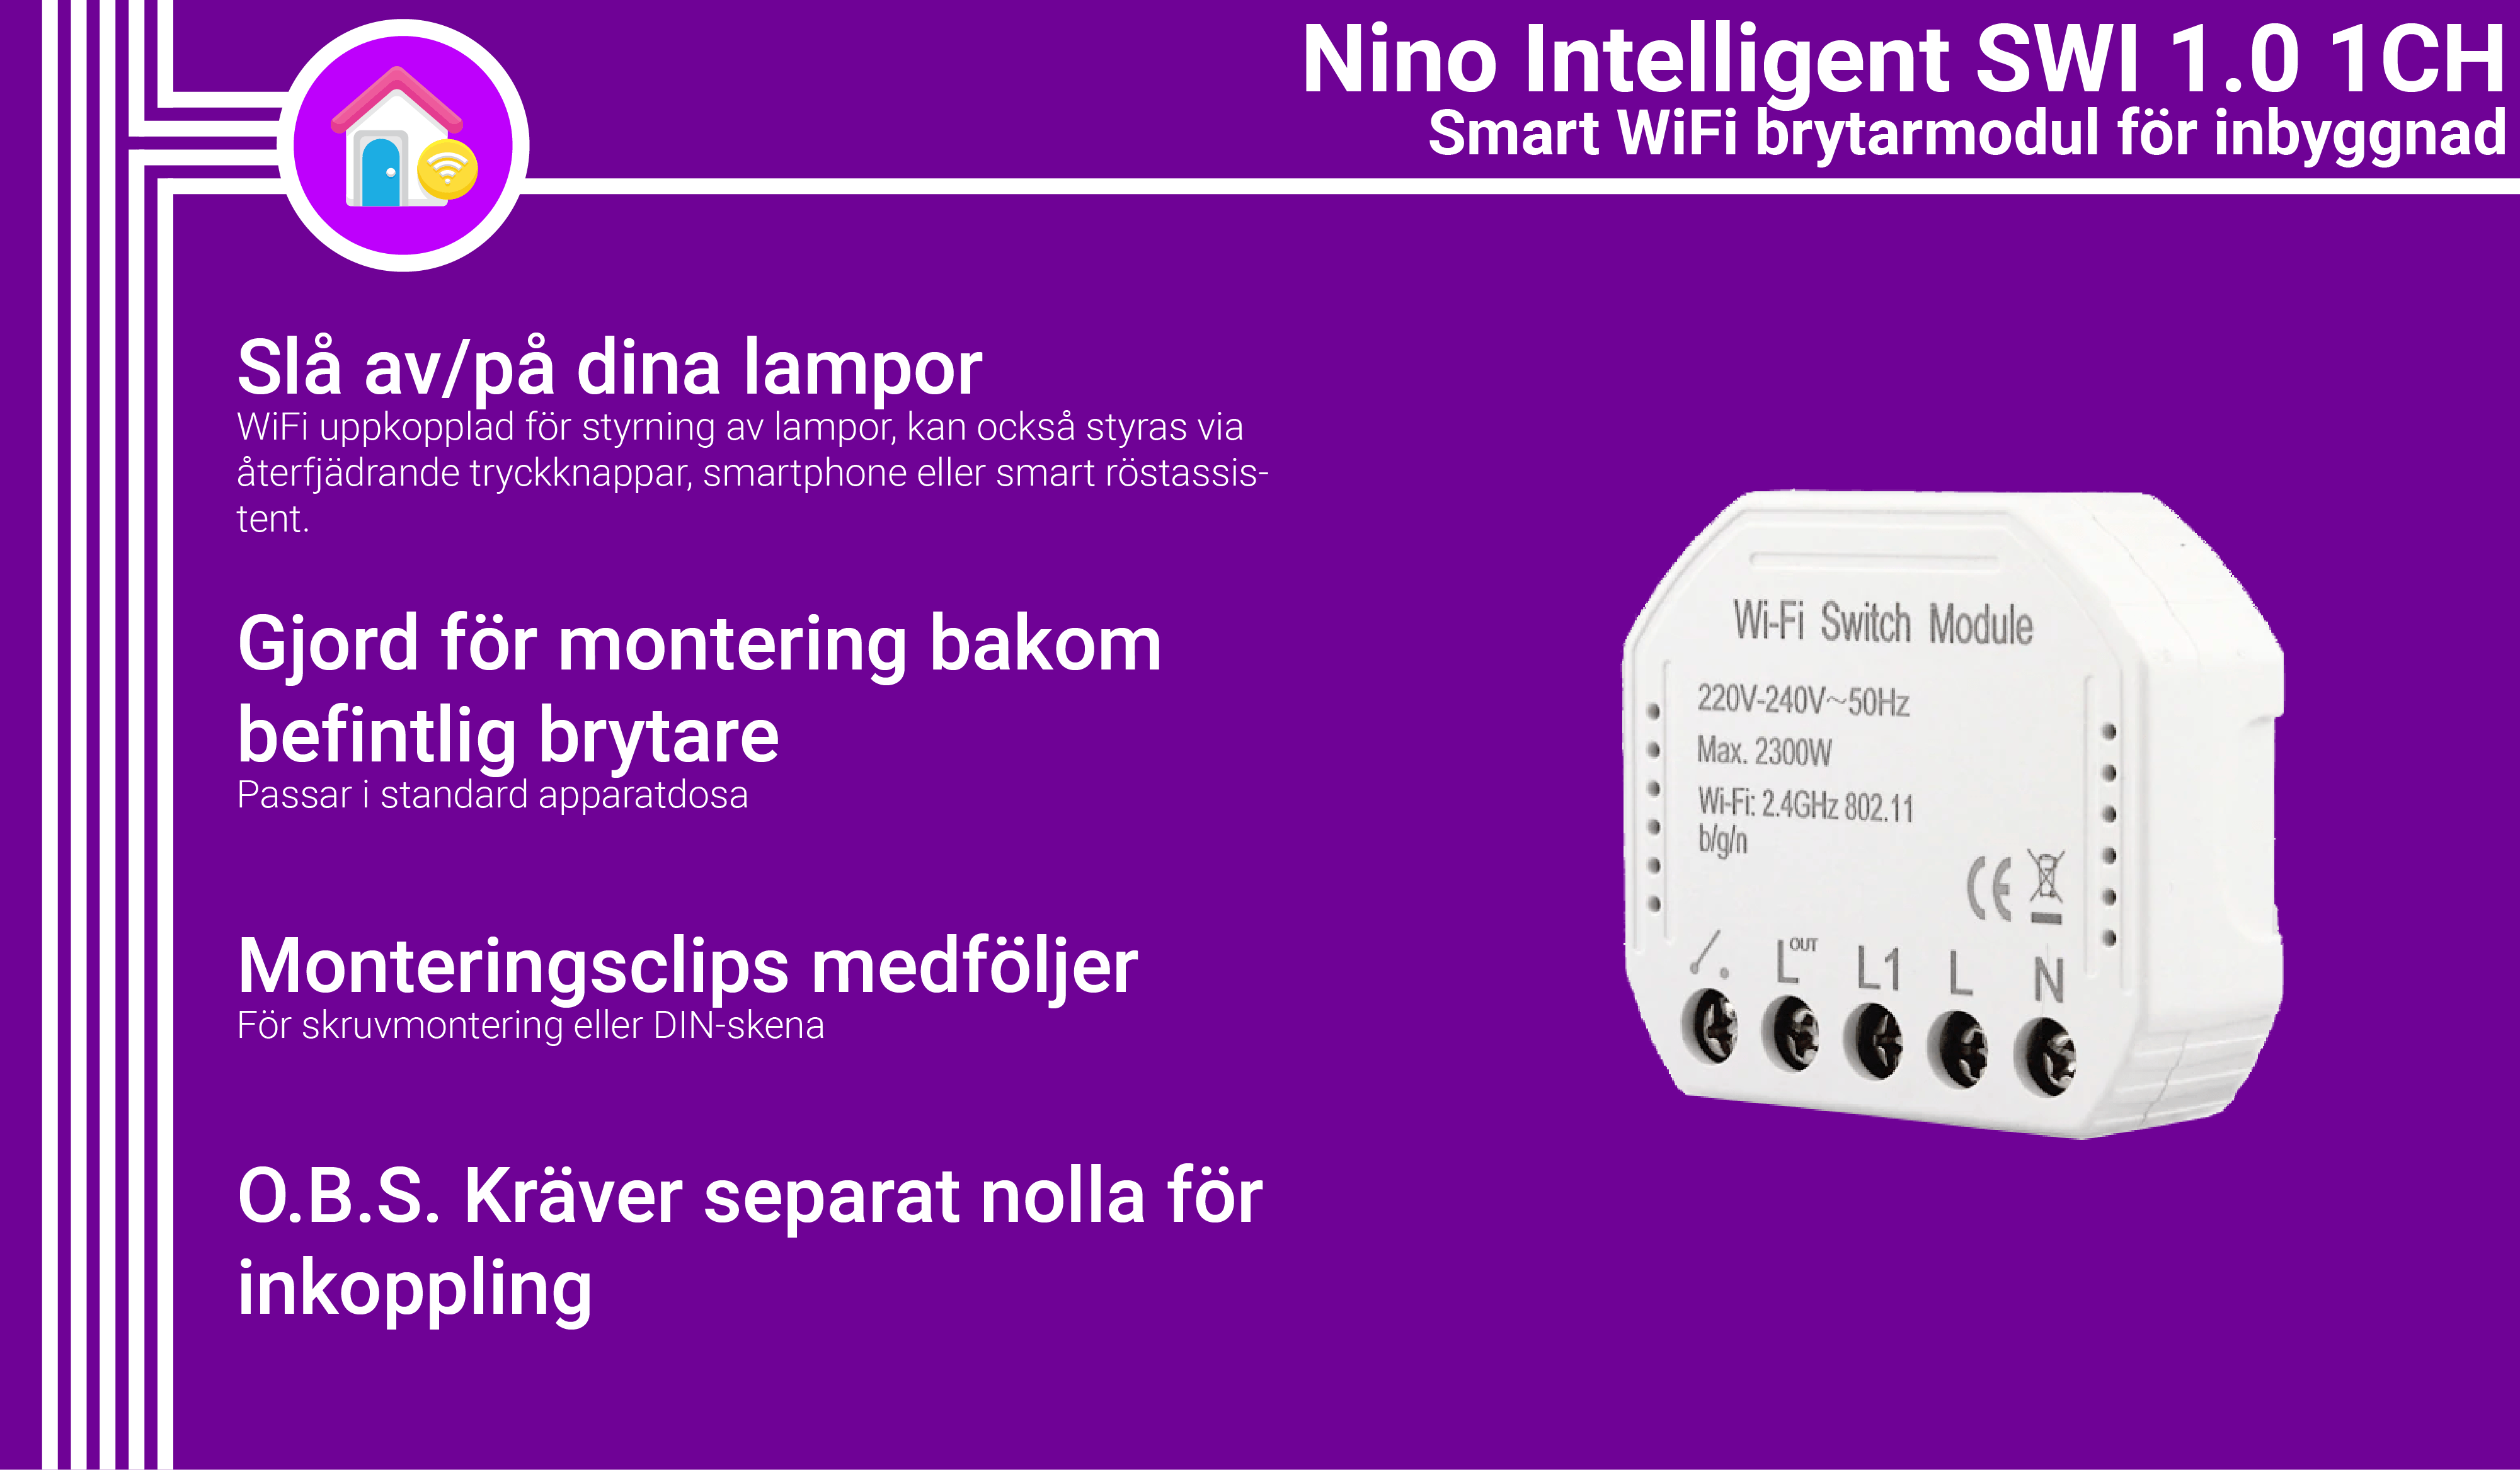 Nino Intelligent SWI 1.0 1CH, WiFi Smart brytarmodul